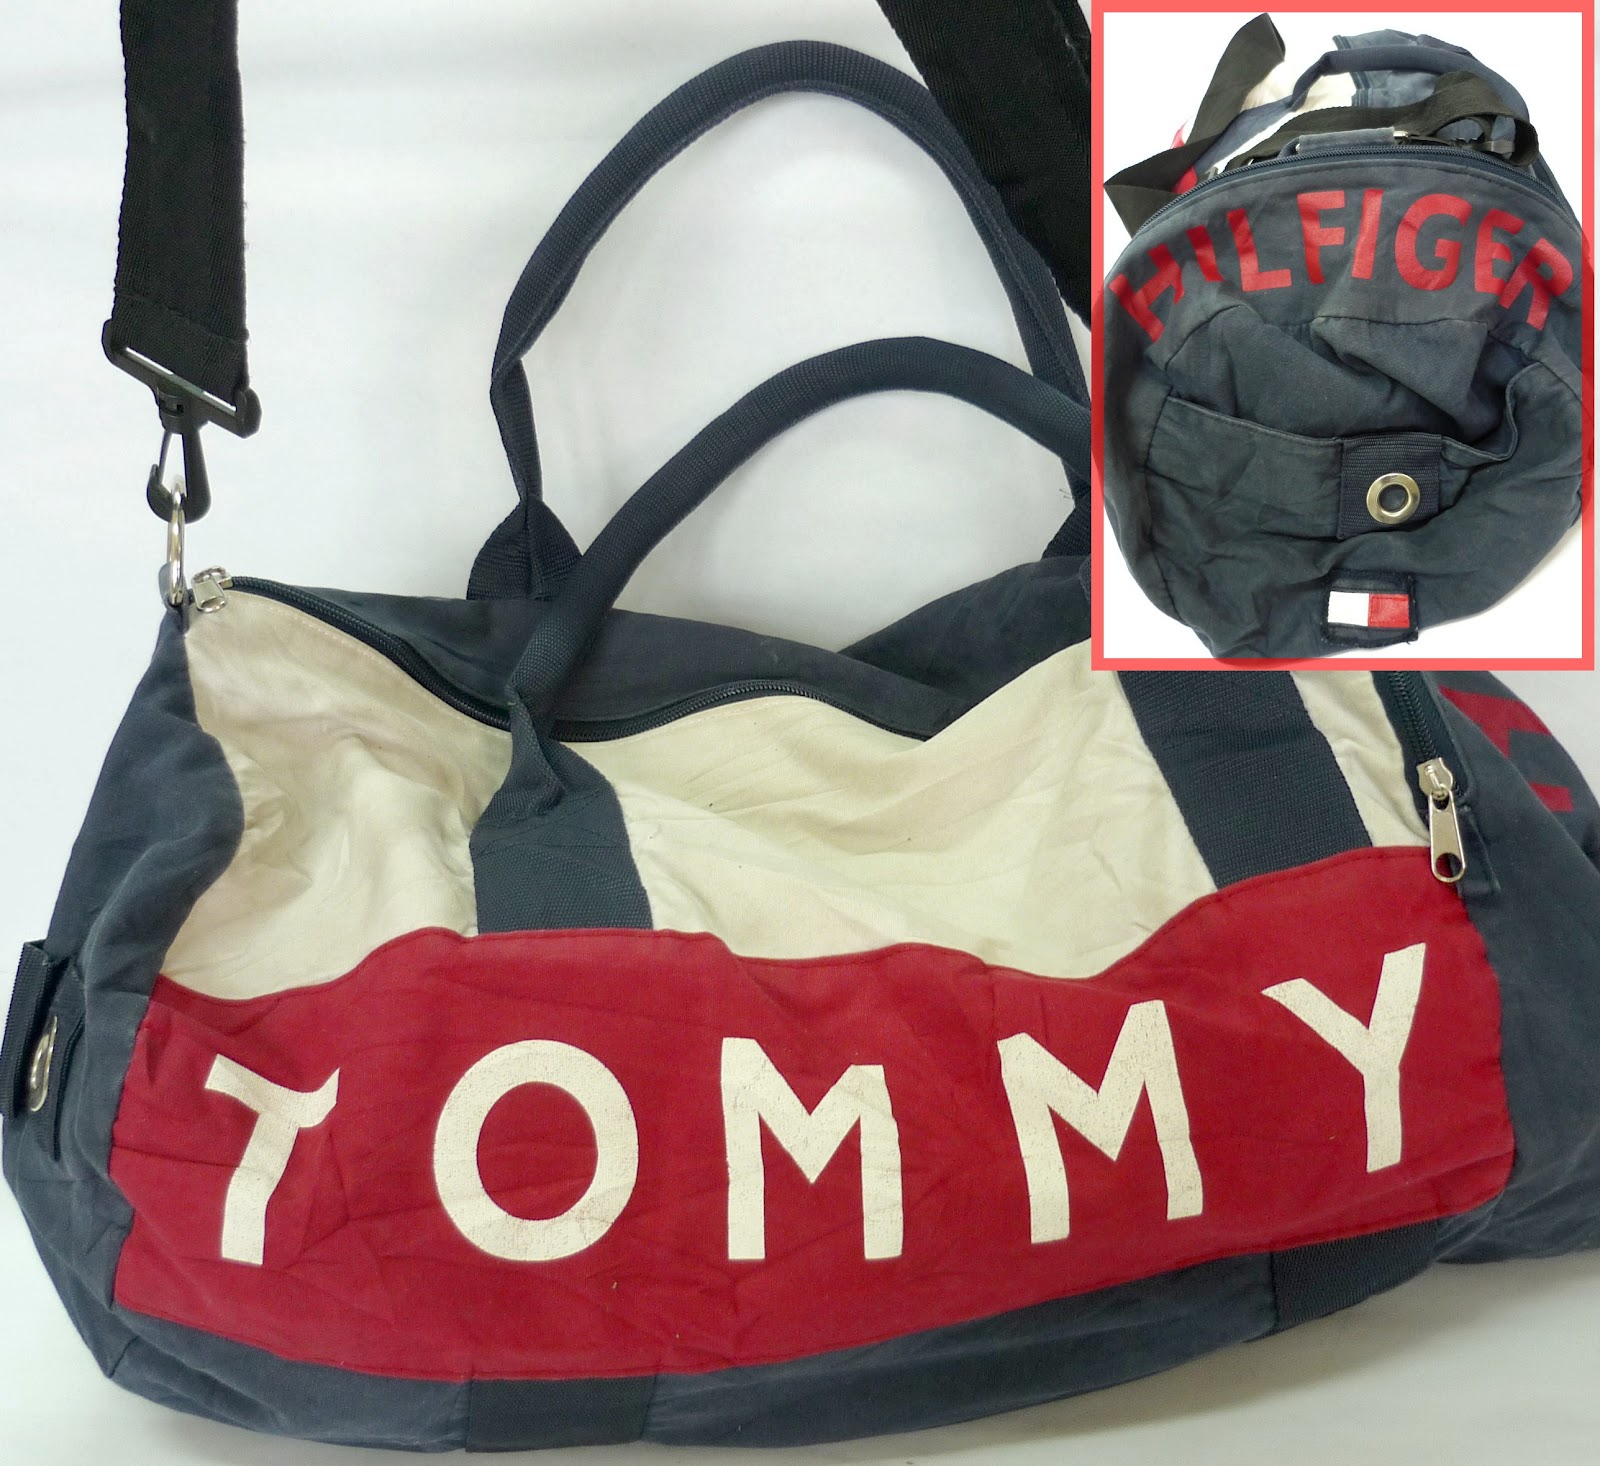 @RCHYbundle: TOMMY HILFIGER BAGS...SOLD